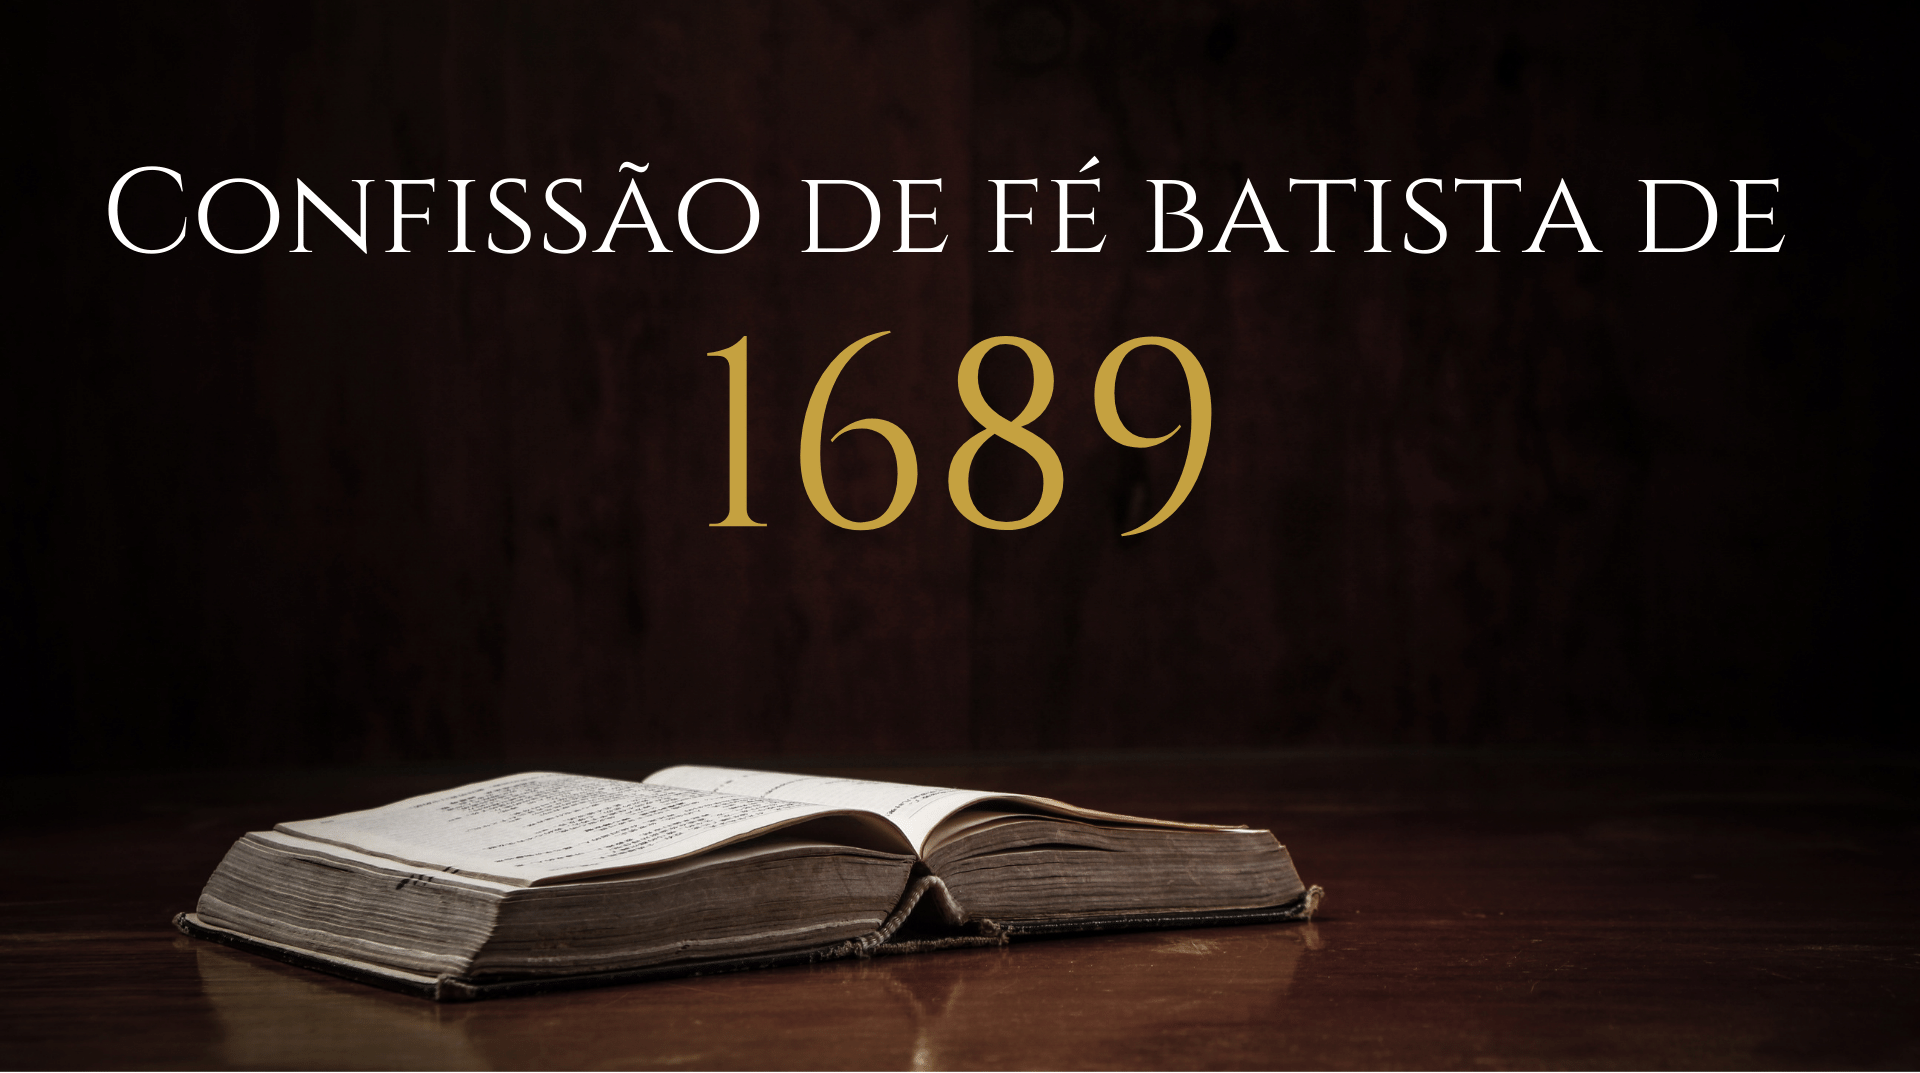 Confissão de Fé Batista de 1689